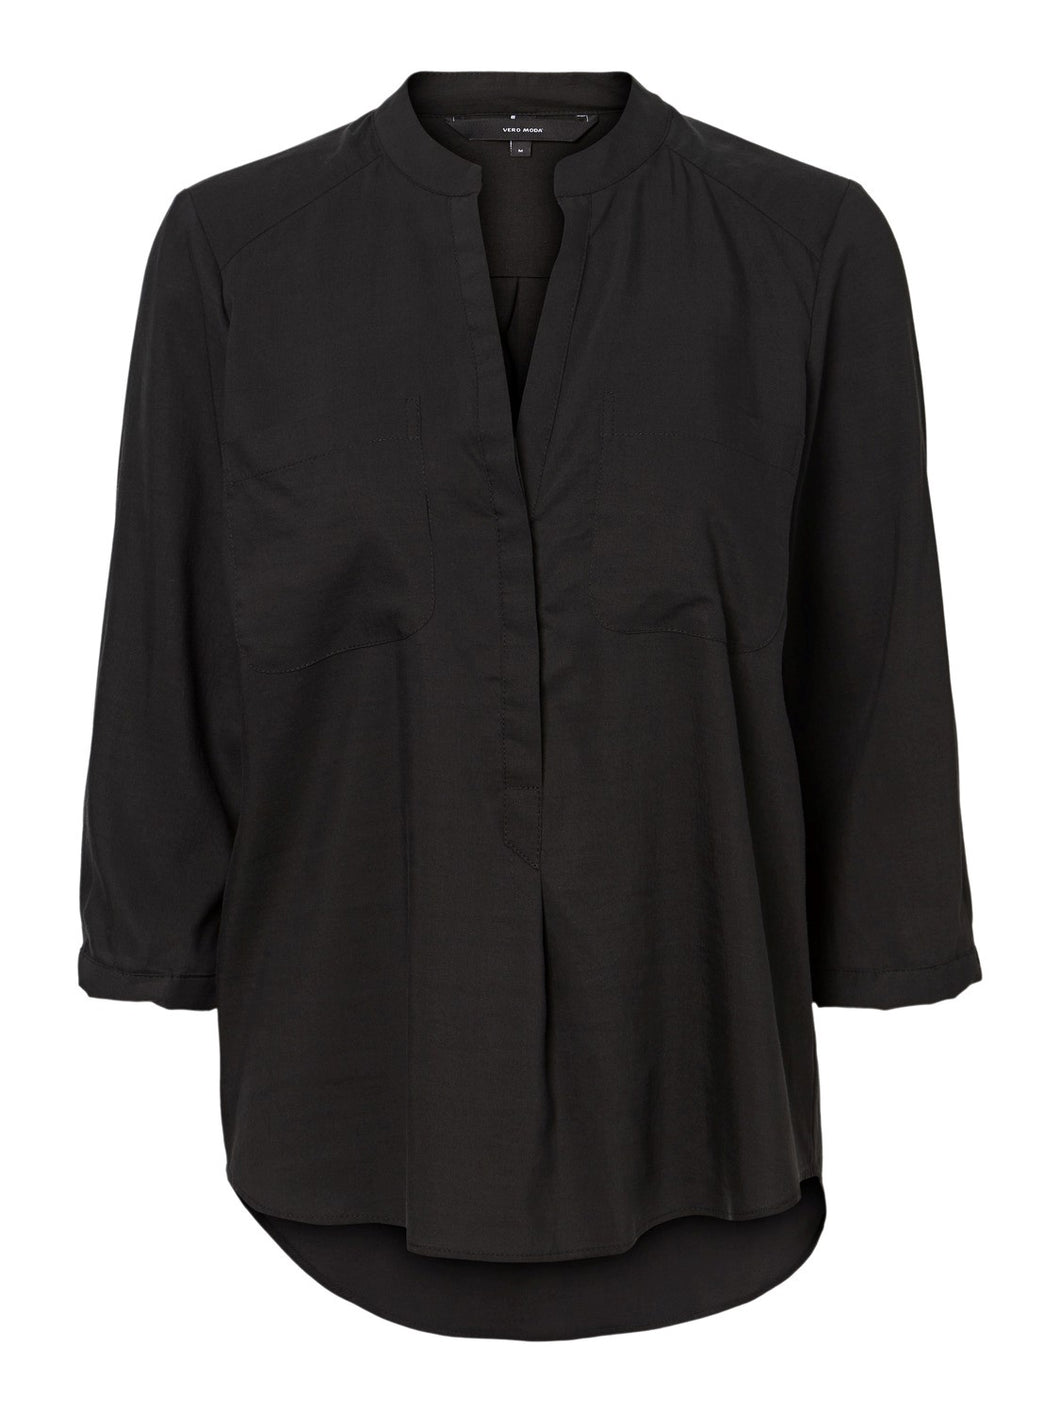 Vero Moda Tanya 3/4 Sleeve Blouse Black